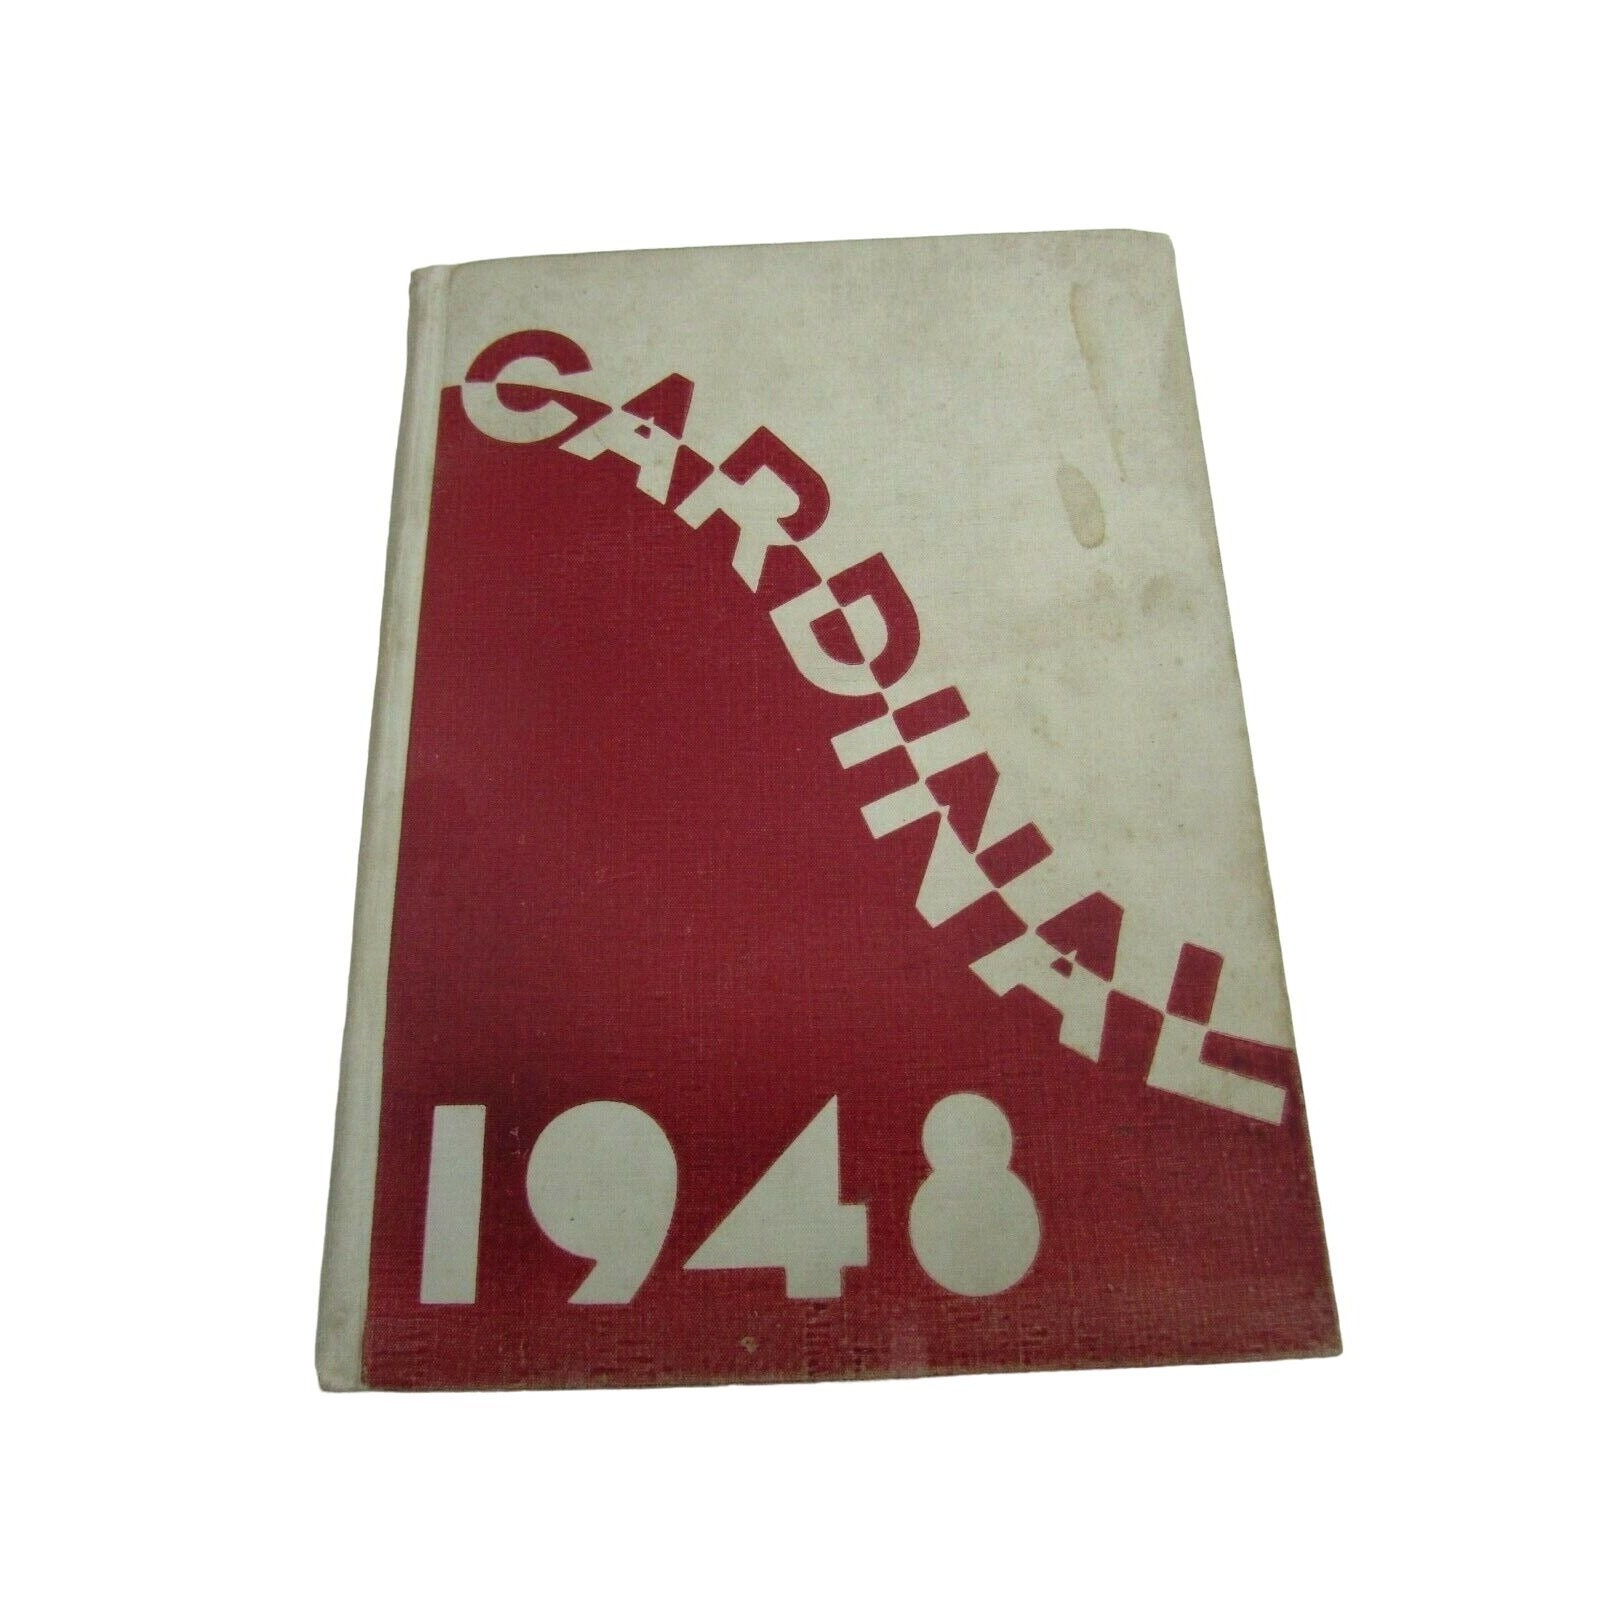 St Louis Cardinals 1973 Yearbook Poster, Unique Memorabilia Wall Art Gift